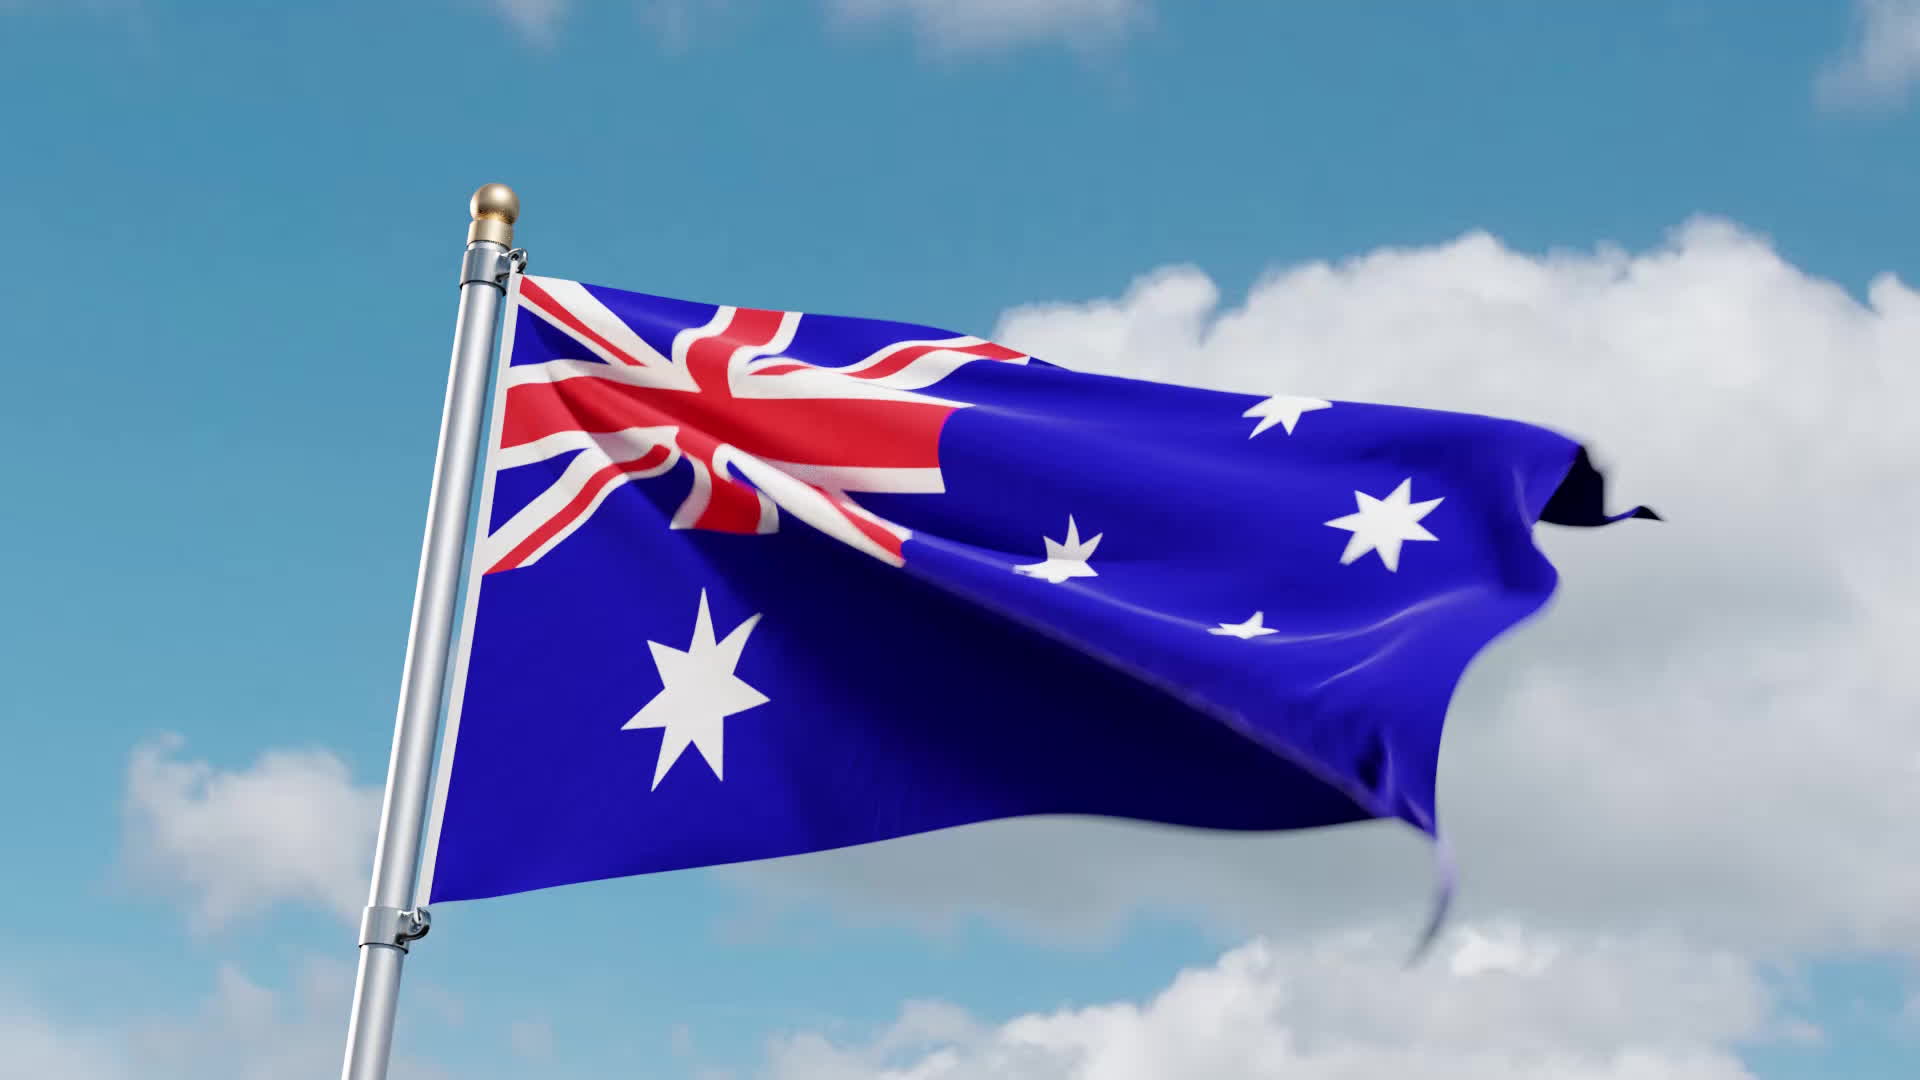 Moving Flags Australia - HD Wallpaper 